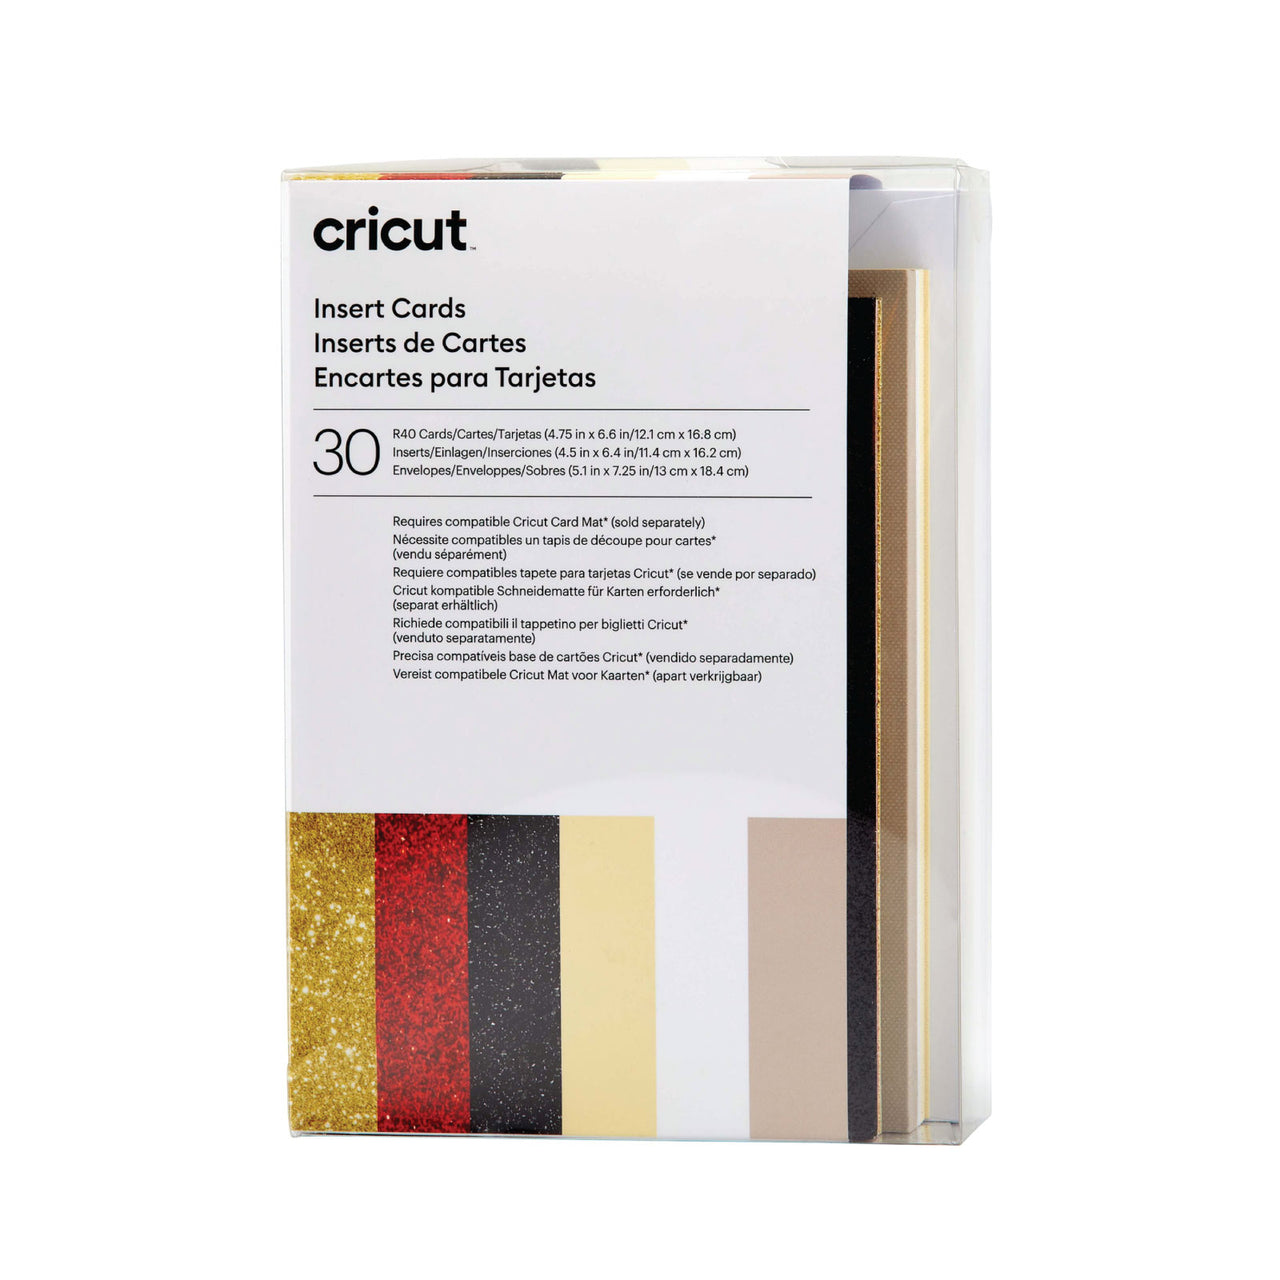 Cricut Insert Cards R40 Glitz and Glam Sampler 30 Count